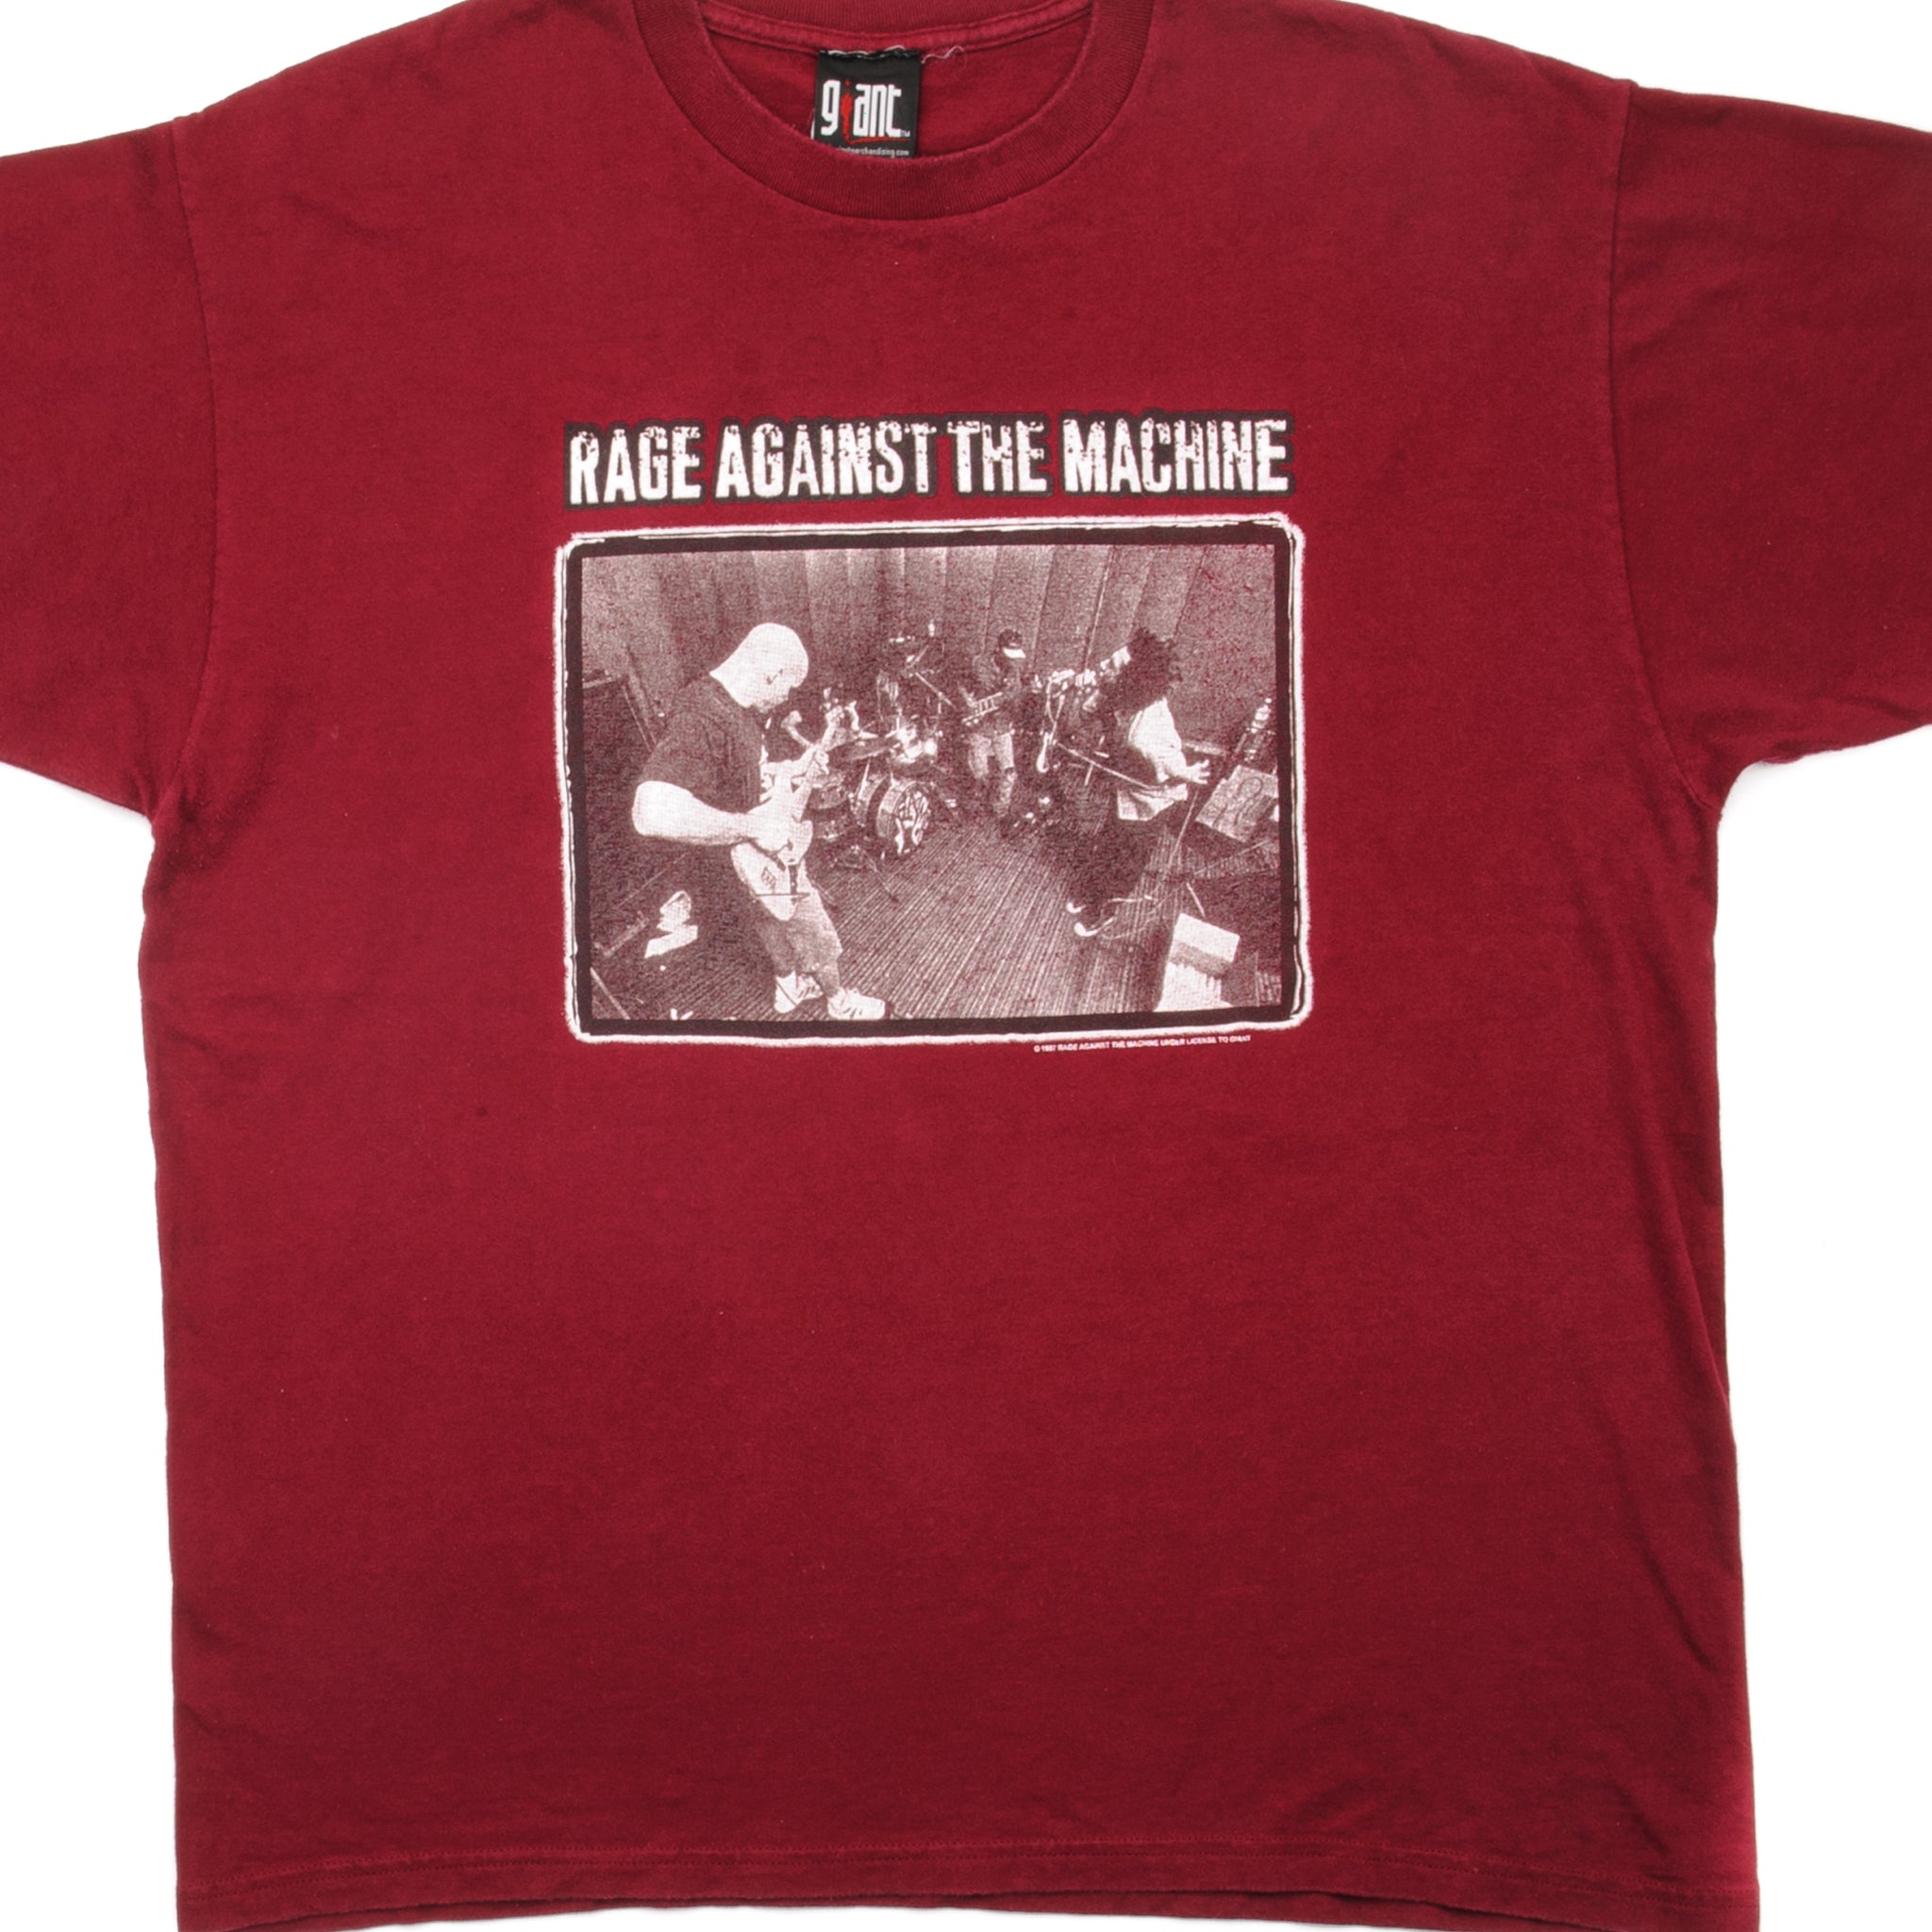 VINTAGE RAGE AGAINST THE MACHINE TEE SHIRT 1997 SIZE XL